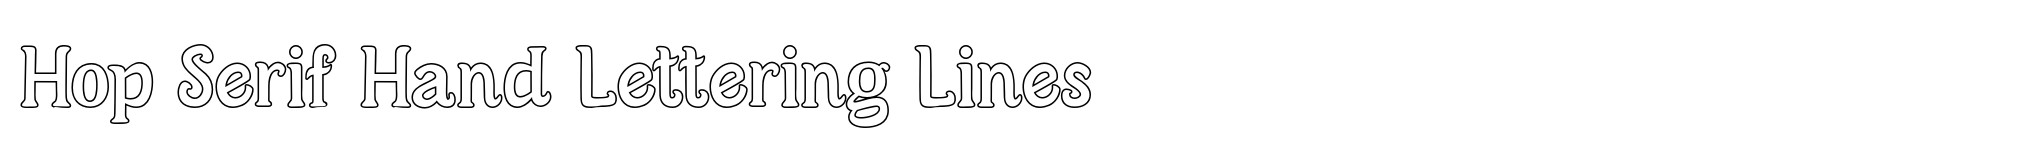 Hop Serif Hand Lettering Lines image